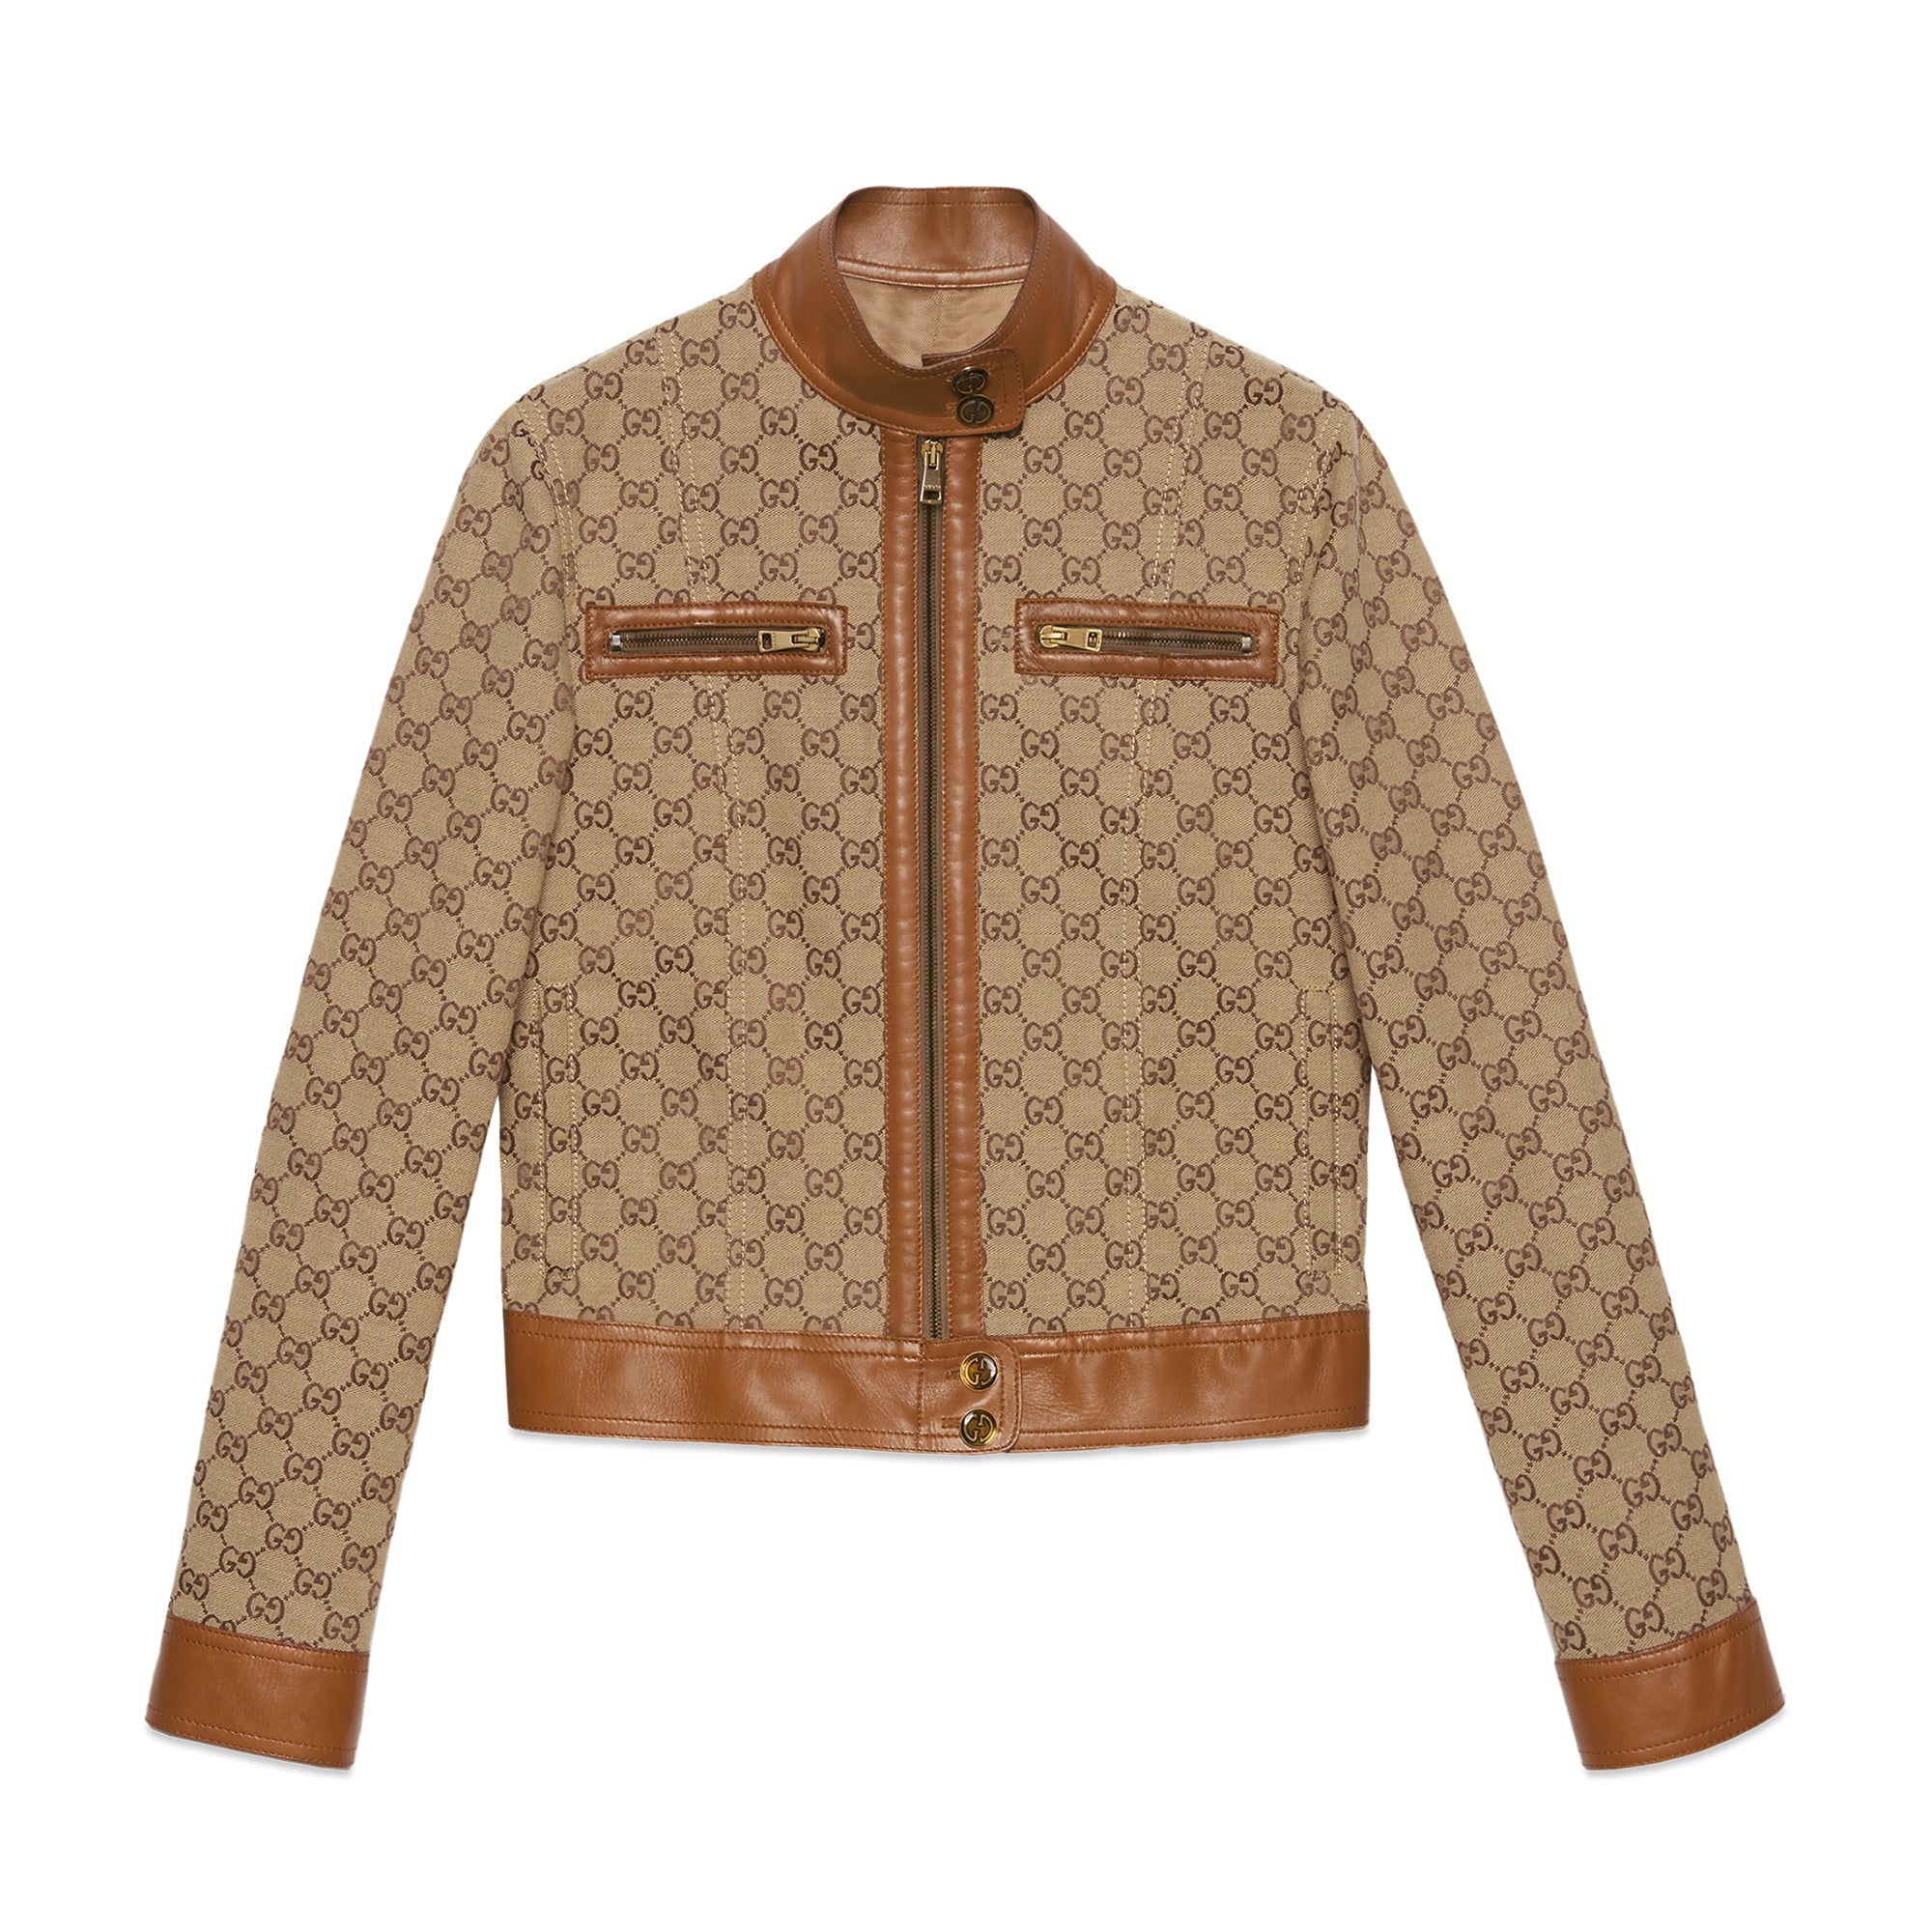 Alligator Gucci jacket NYC 